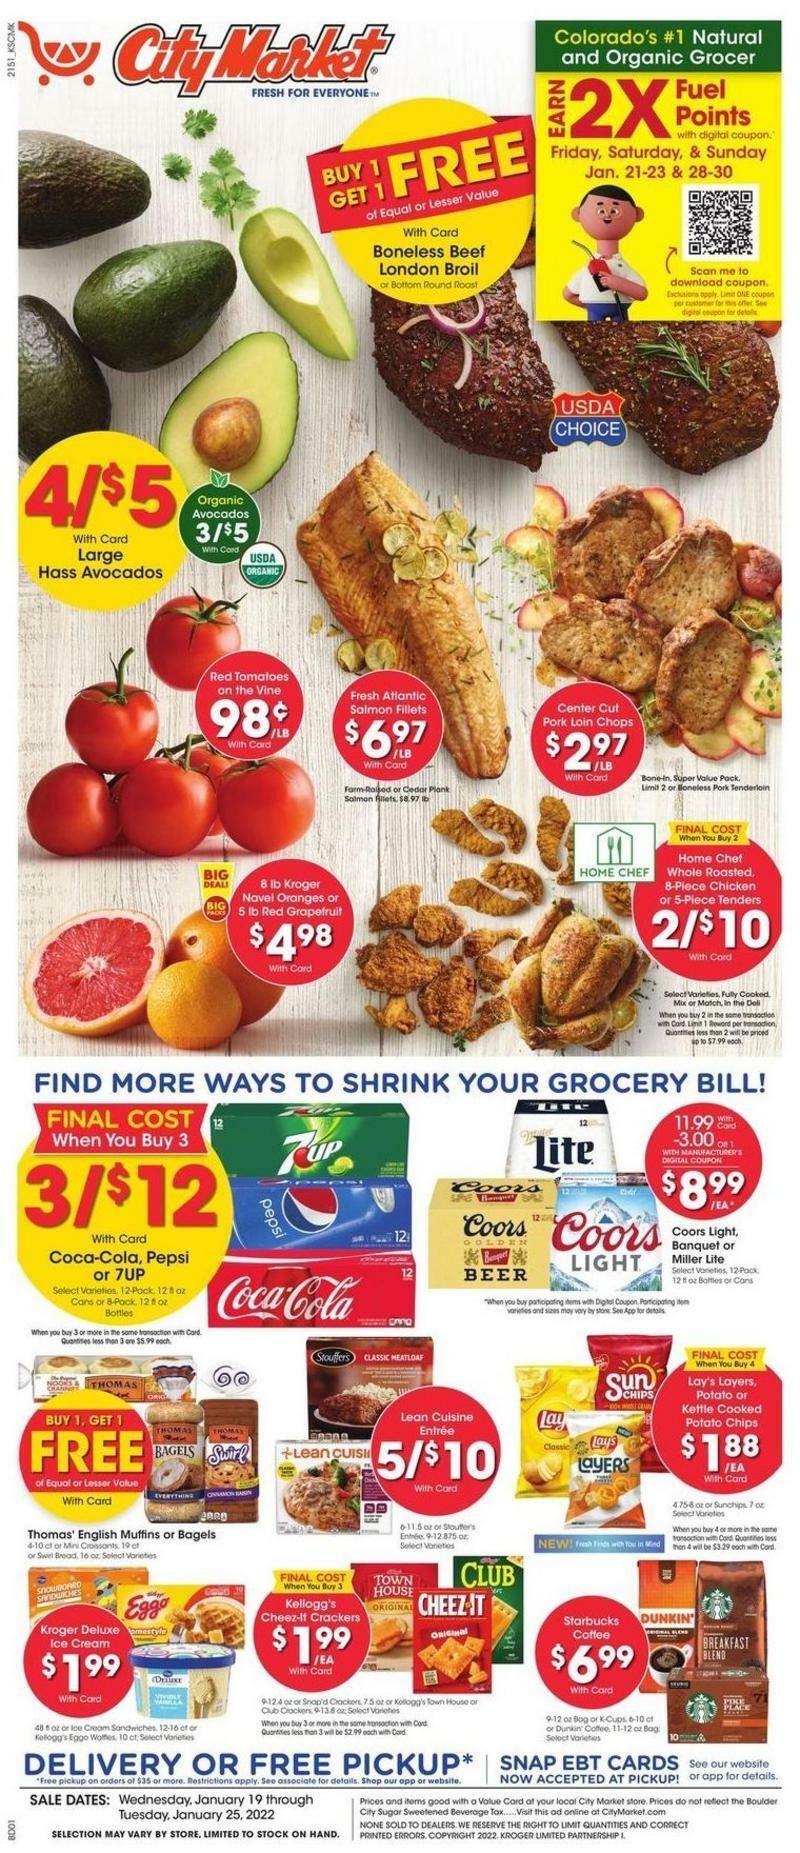 City Market Weekly Ad from January 19